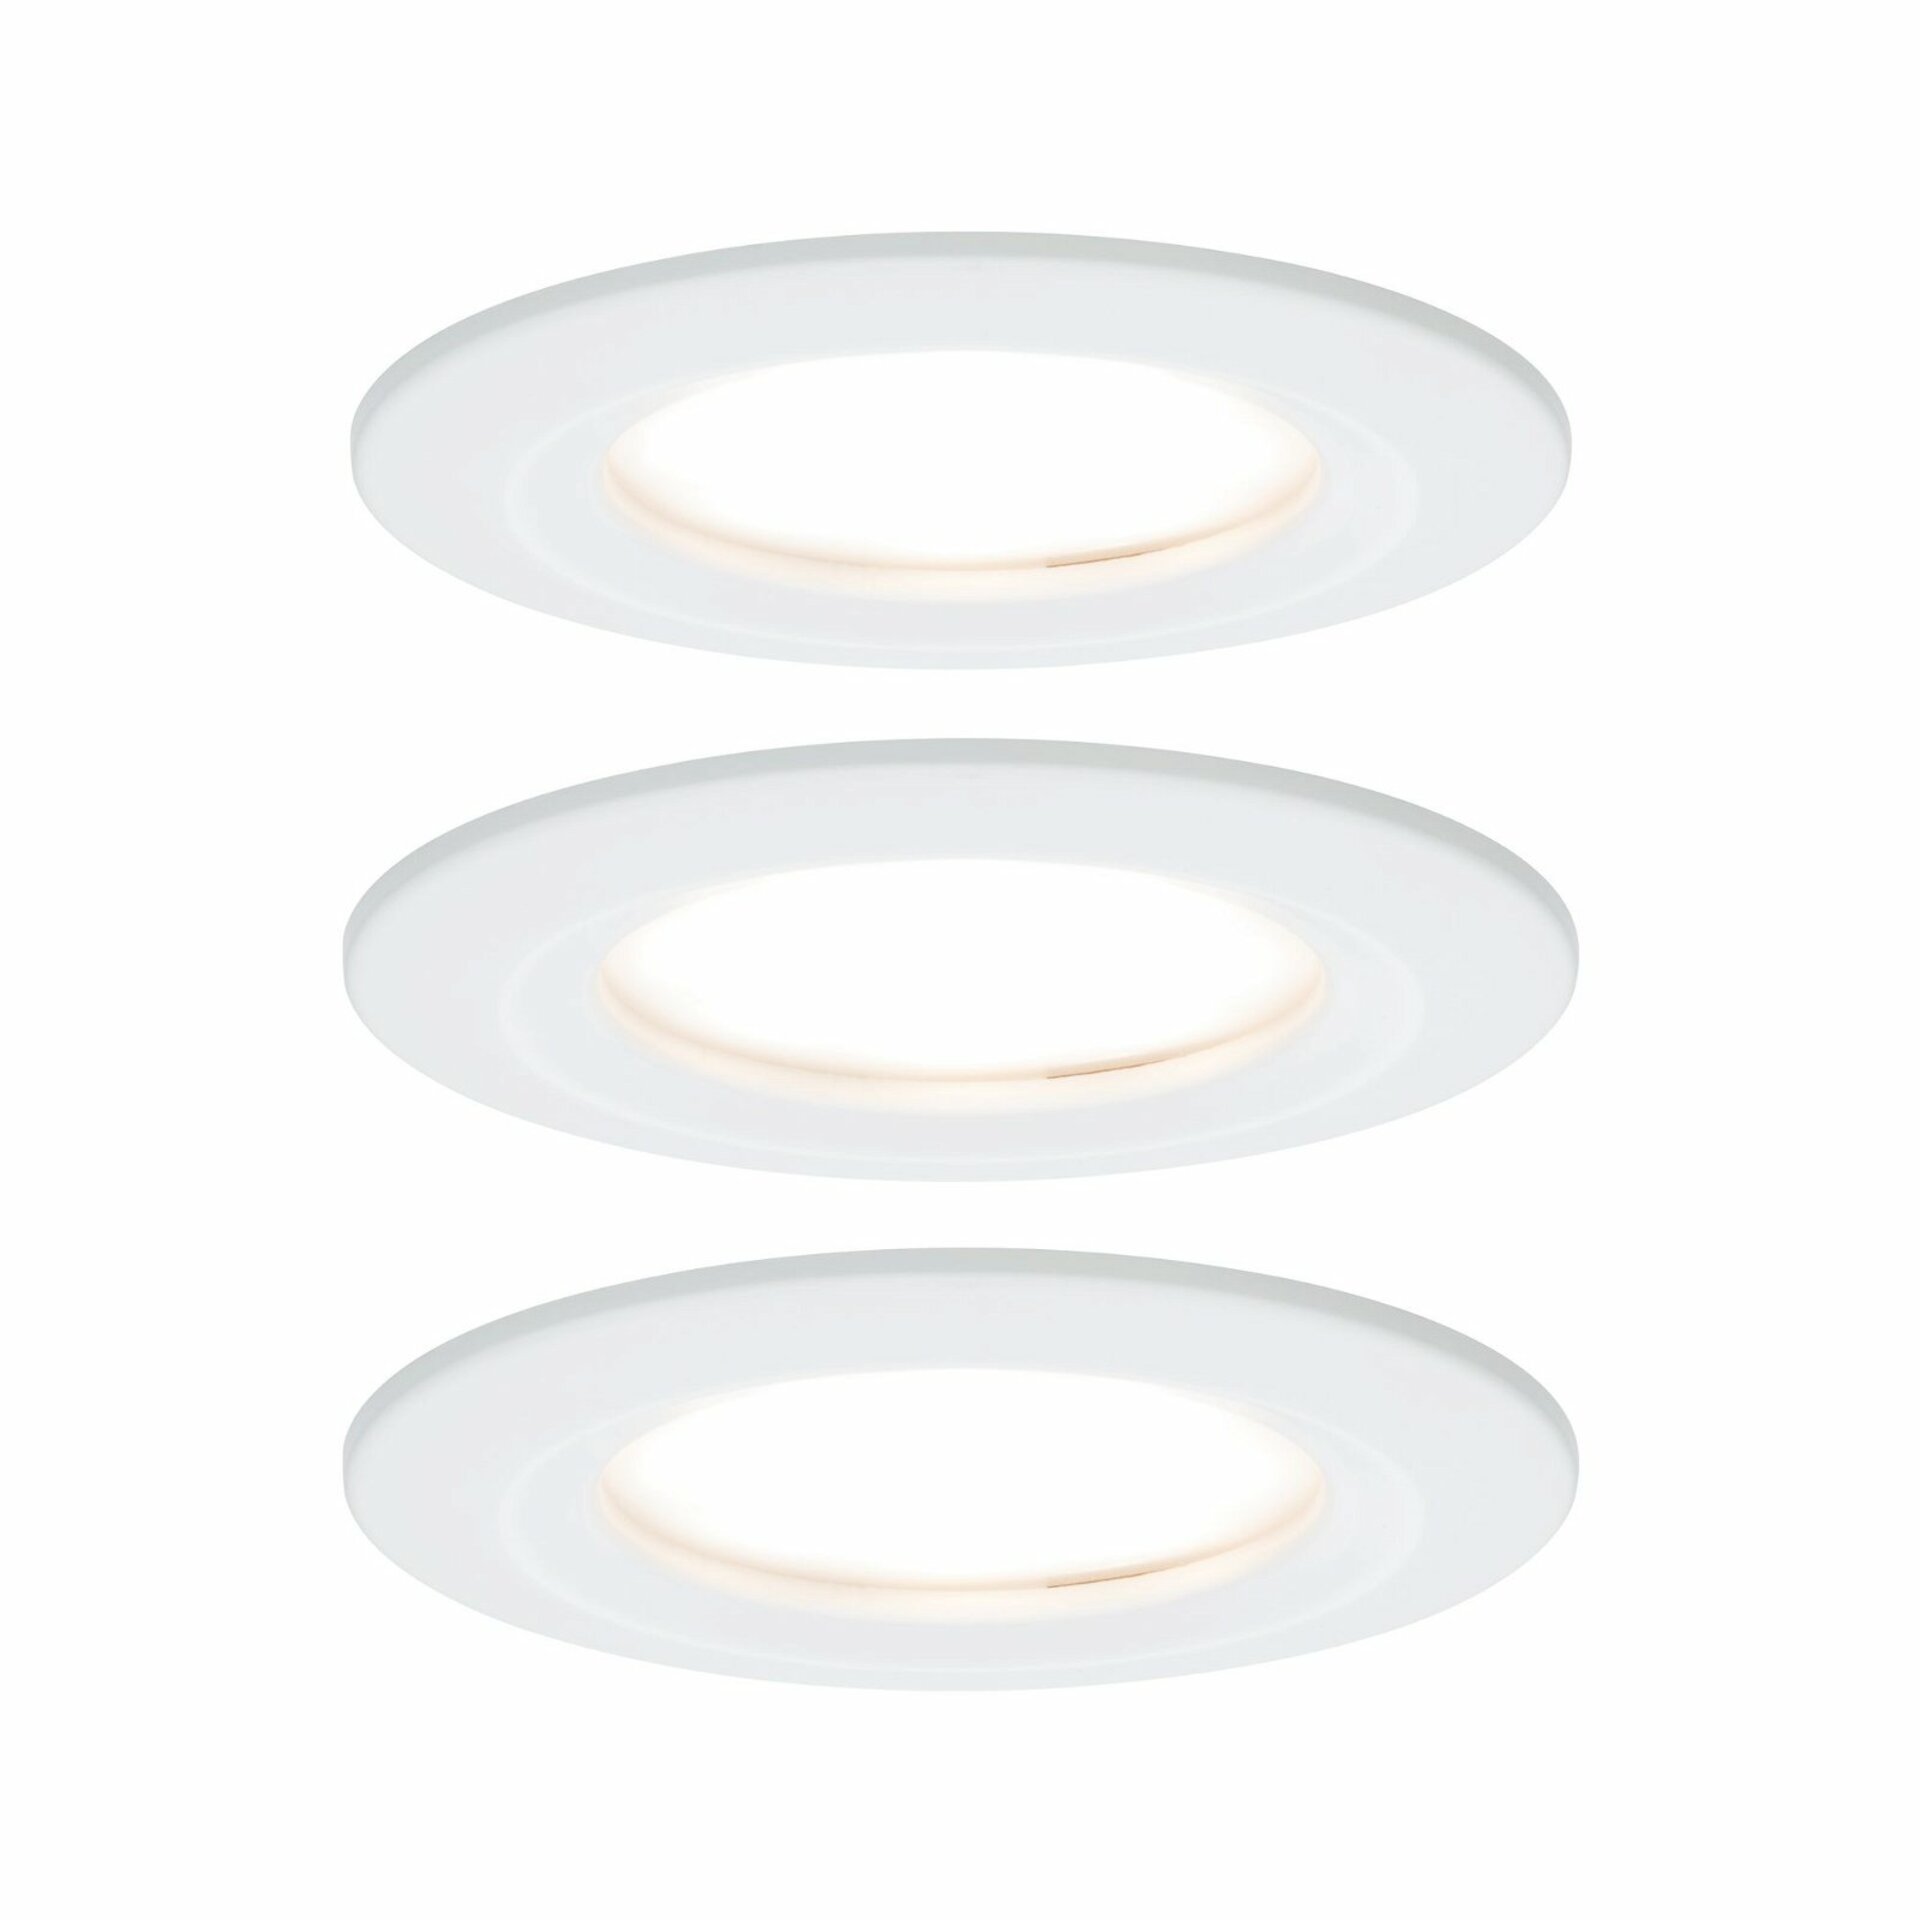 Paulmann vestavné svítidlo LED Coin Slim IP44 kruhové 6,8W bílá 3ks sada stmívatelné 938.70 P 93870